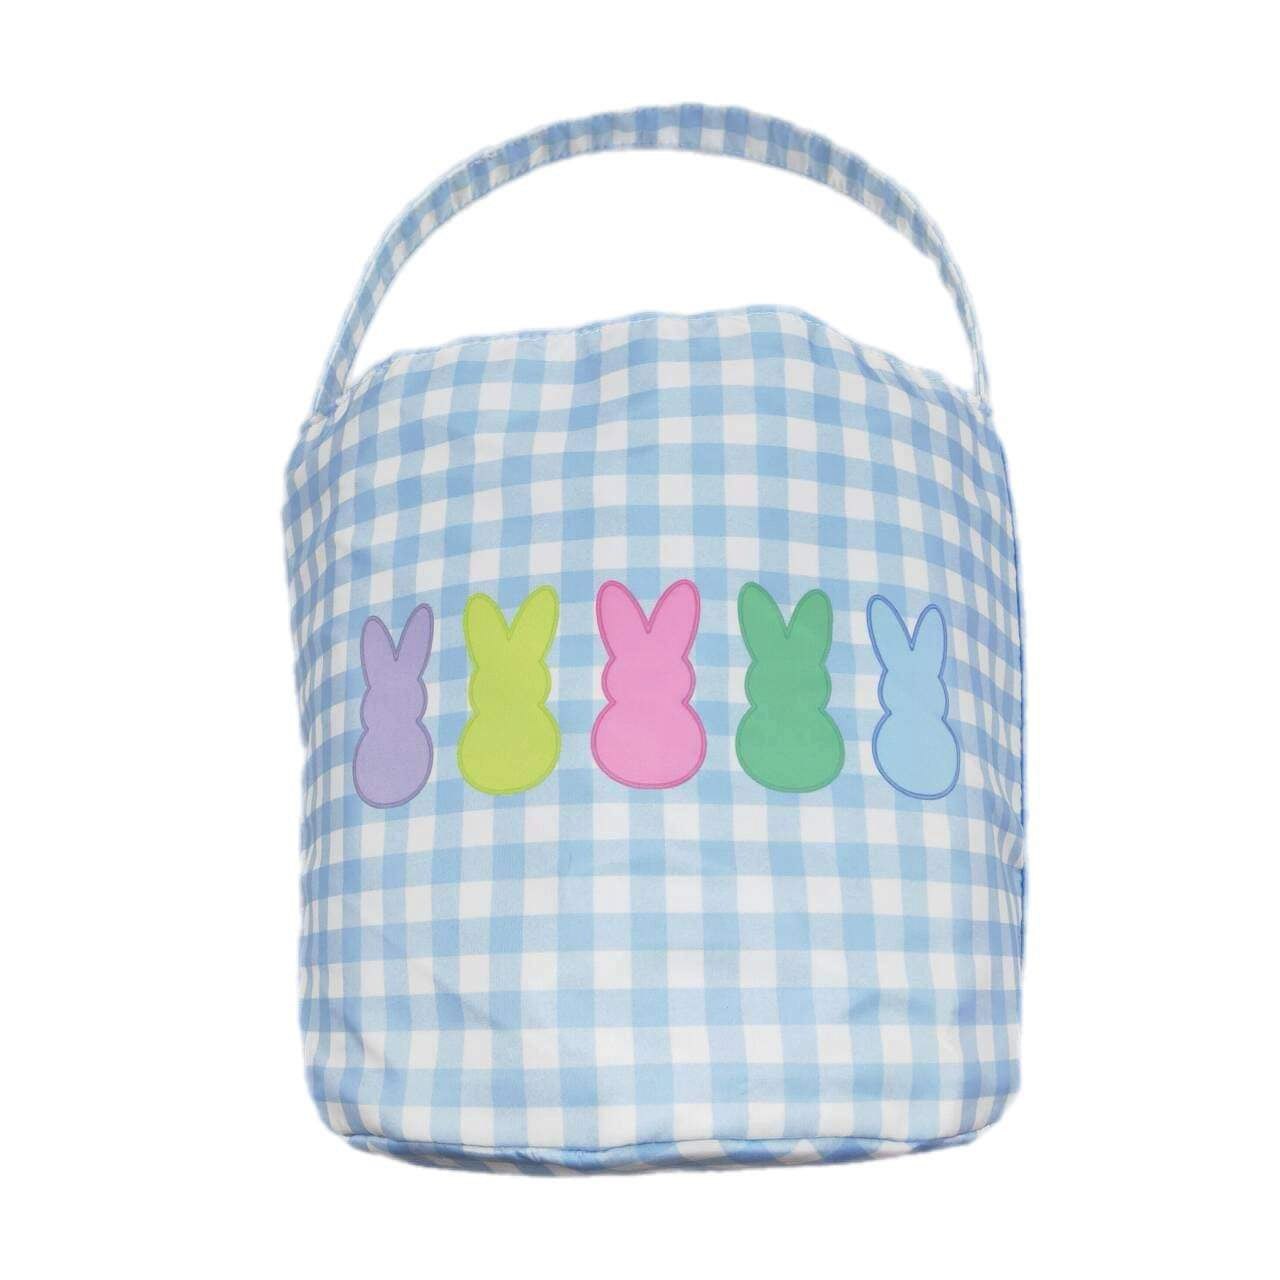 ᴡᴇᴇᴋʟʏ ᴘʀᴇ ᴏʀᴅᴇʀ Easter Blue Checkered Basket with Bunnies